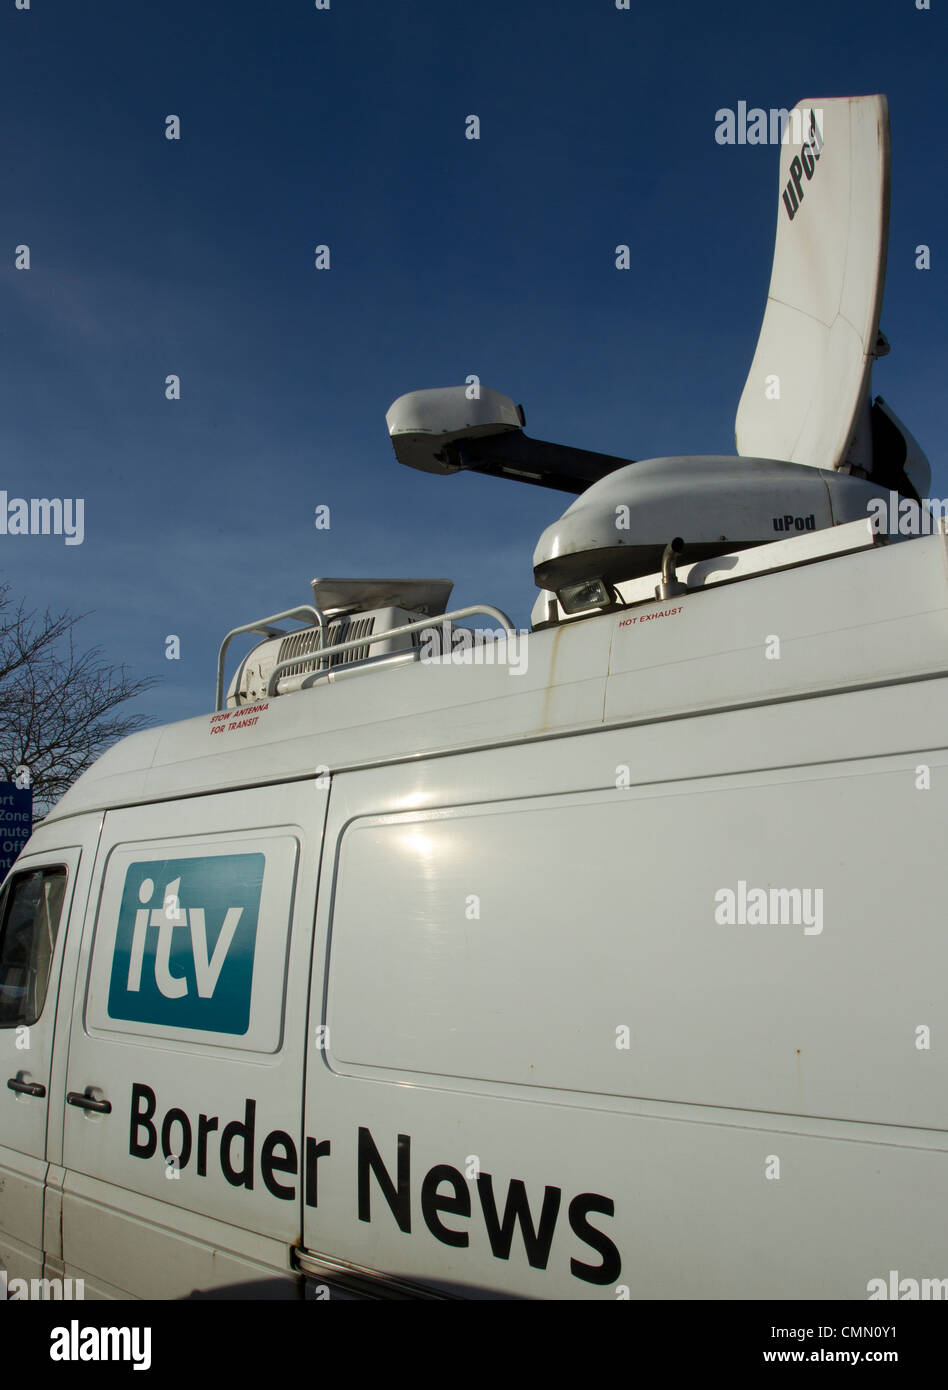 ITV uplink  Granada  News & Border TV Stock Photo